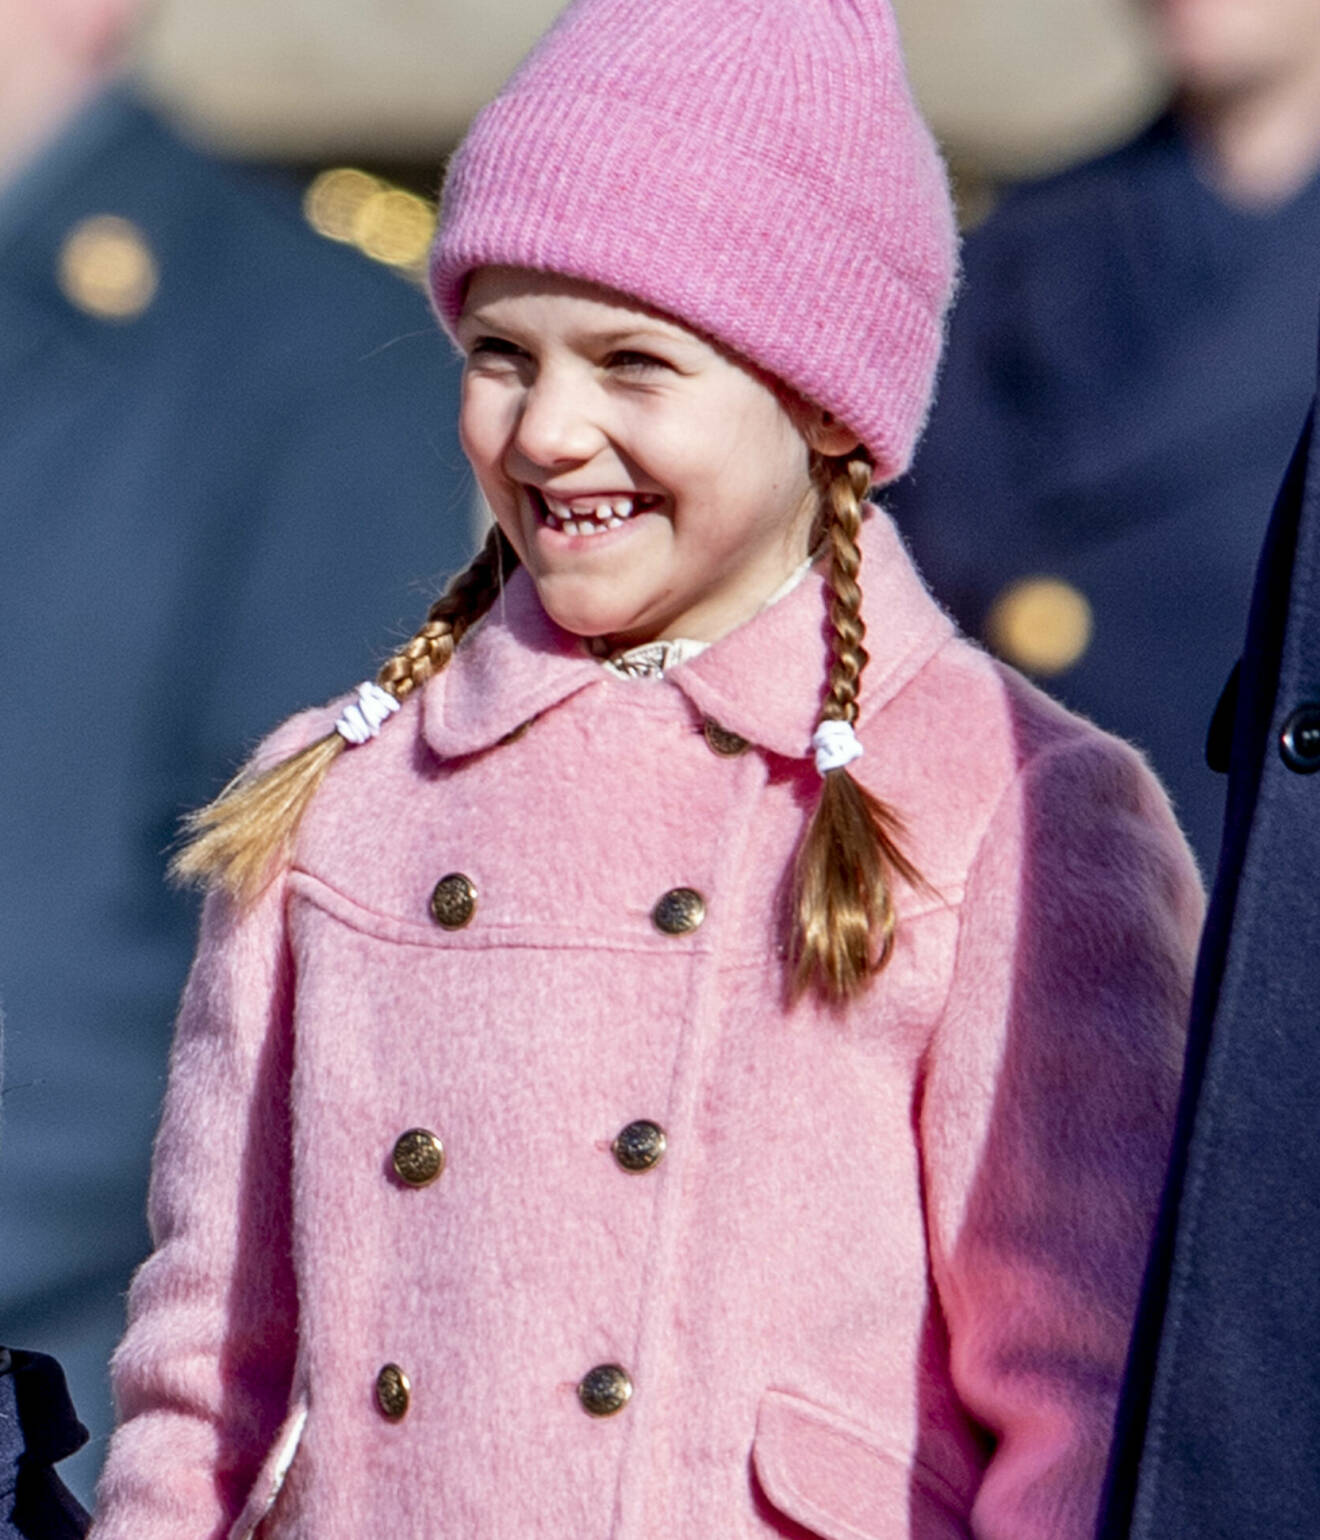 Prinsessan Estelle firar kronprinsessan Victorias namnsdag 2019